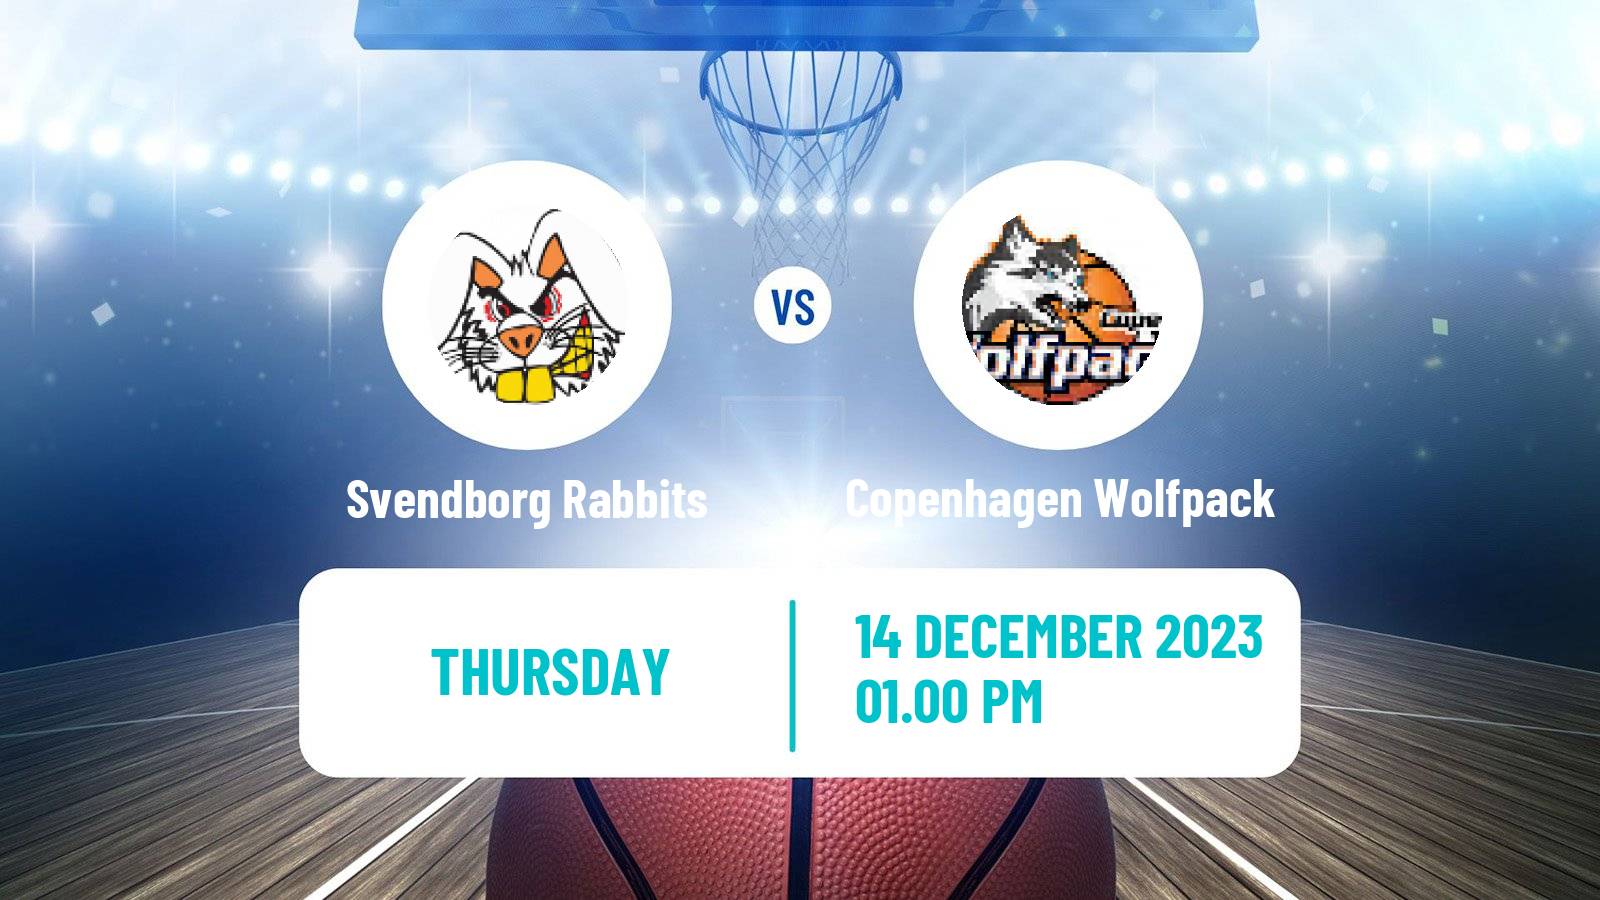 Basketball Danish Basketligaen Svendborg Rabbits - Copenhagen Wolfpack